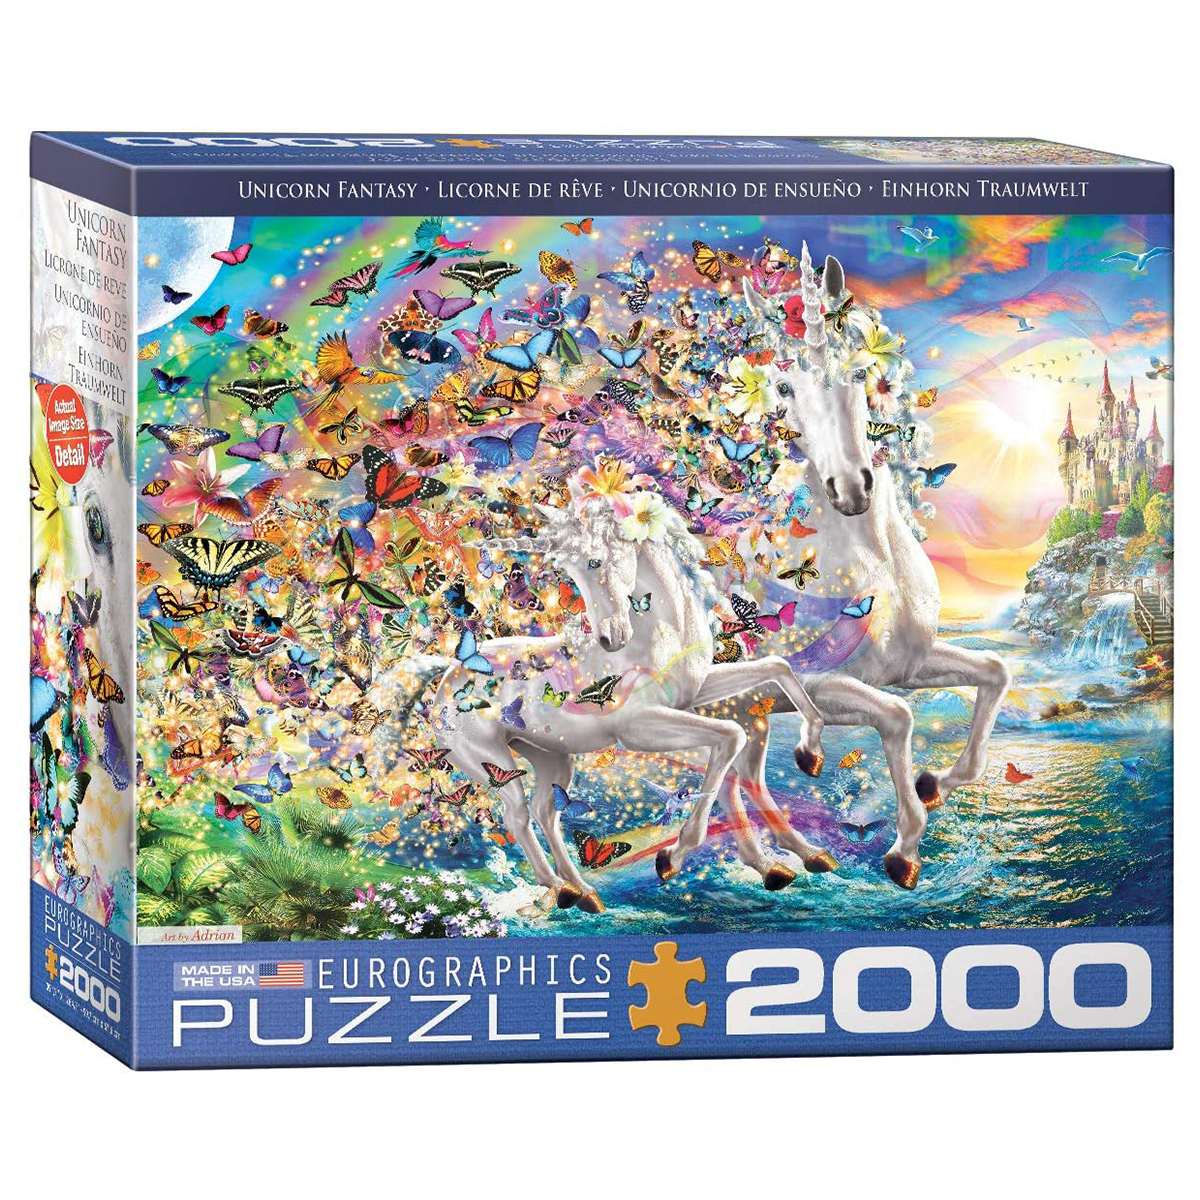 Puzzle Eurographics Unicornio de Ensueño de 2000 piezas